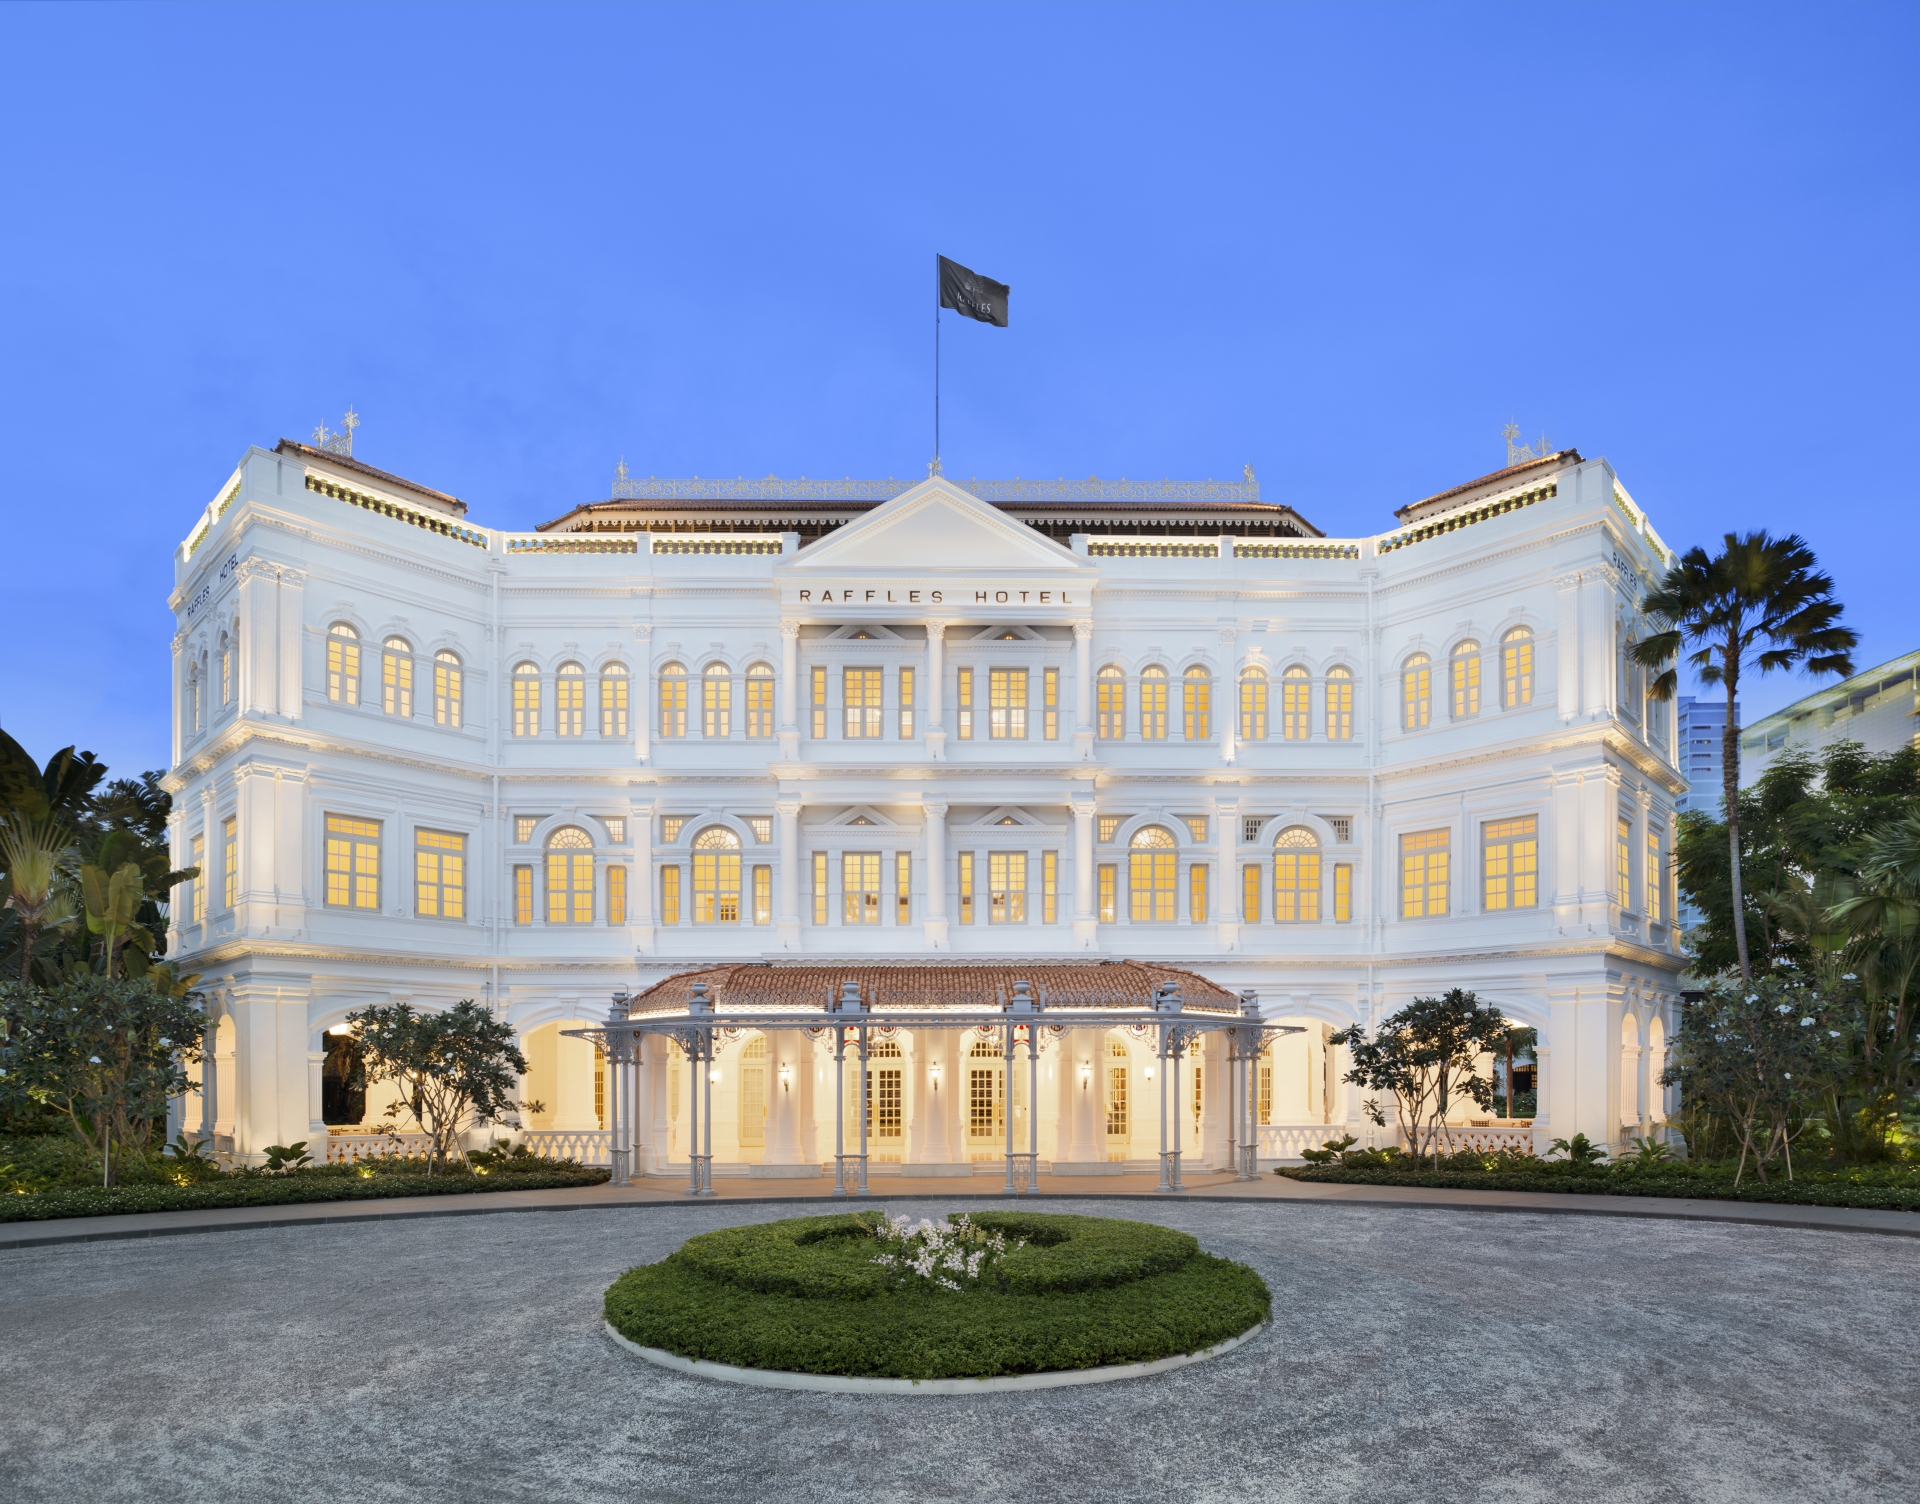 Twilight Exterior - Raffles Hotel Singapore 